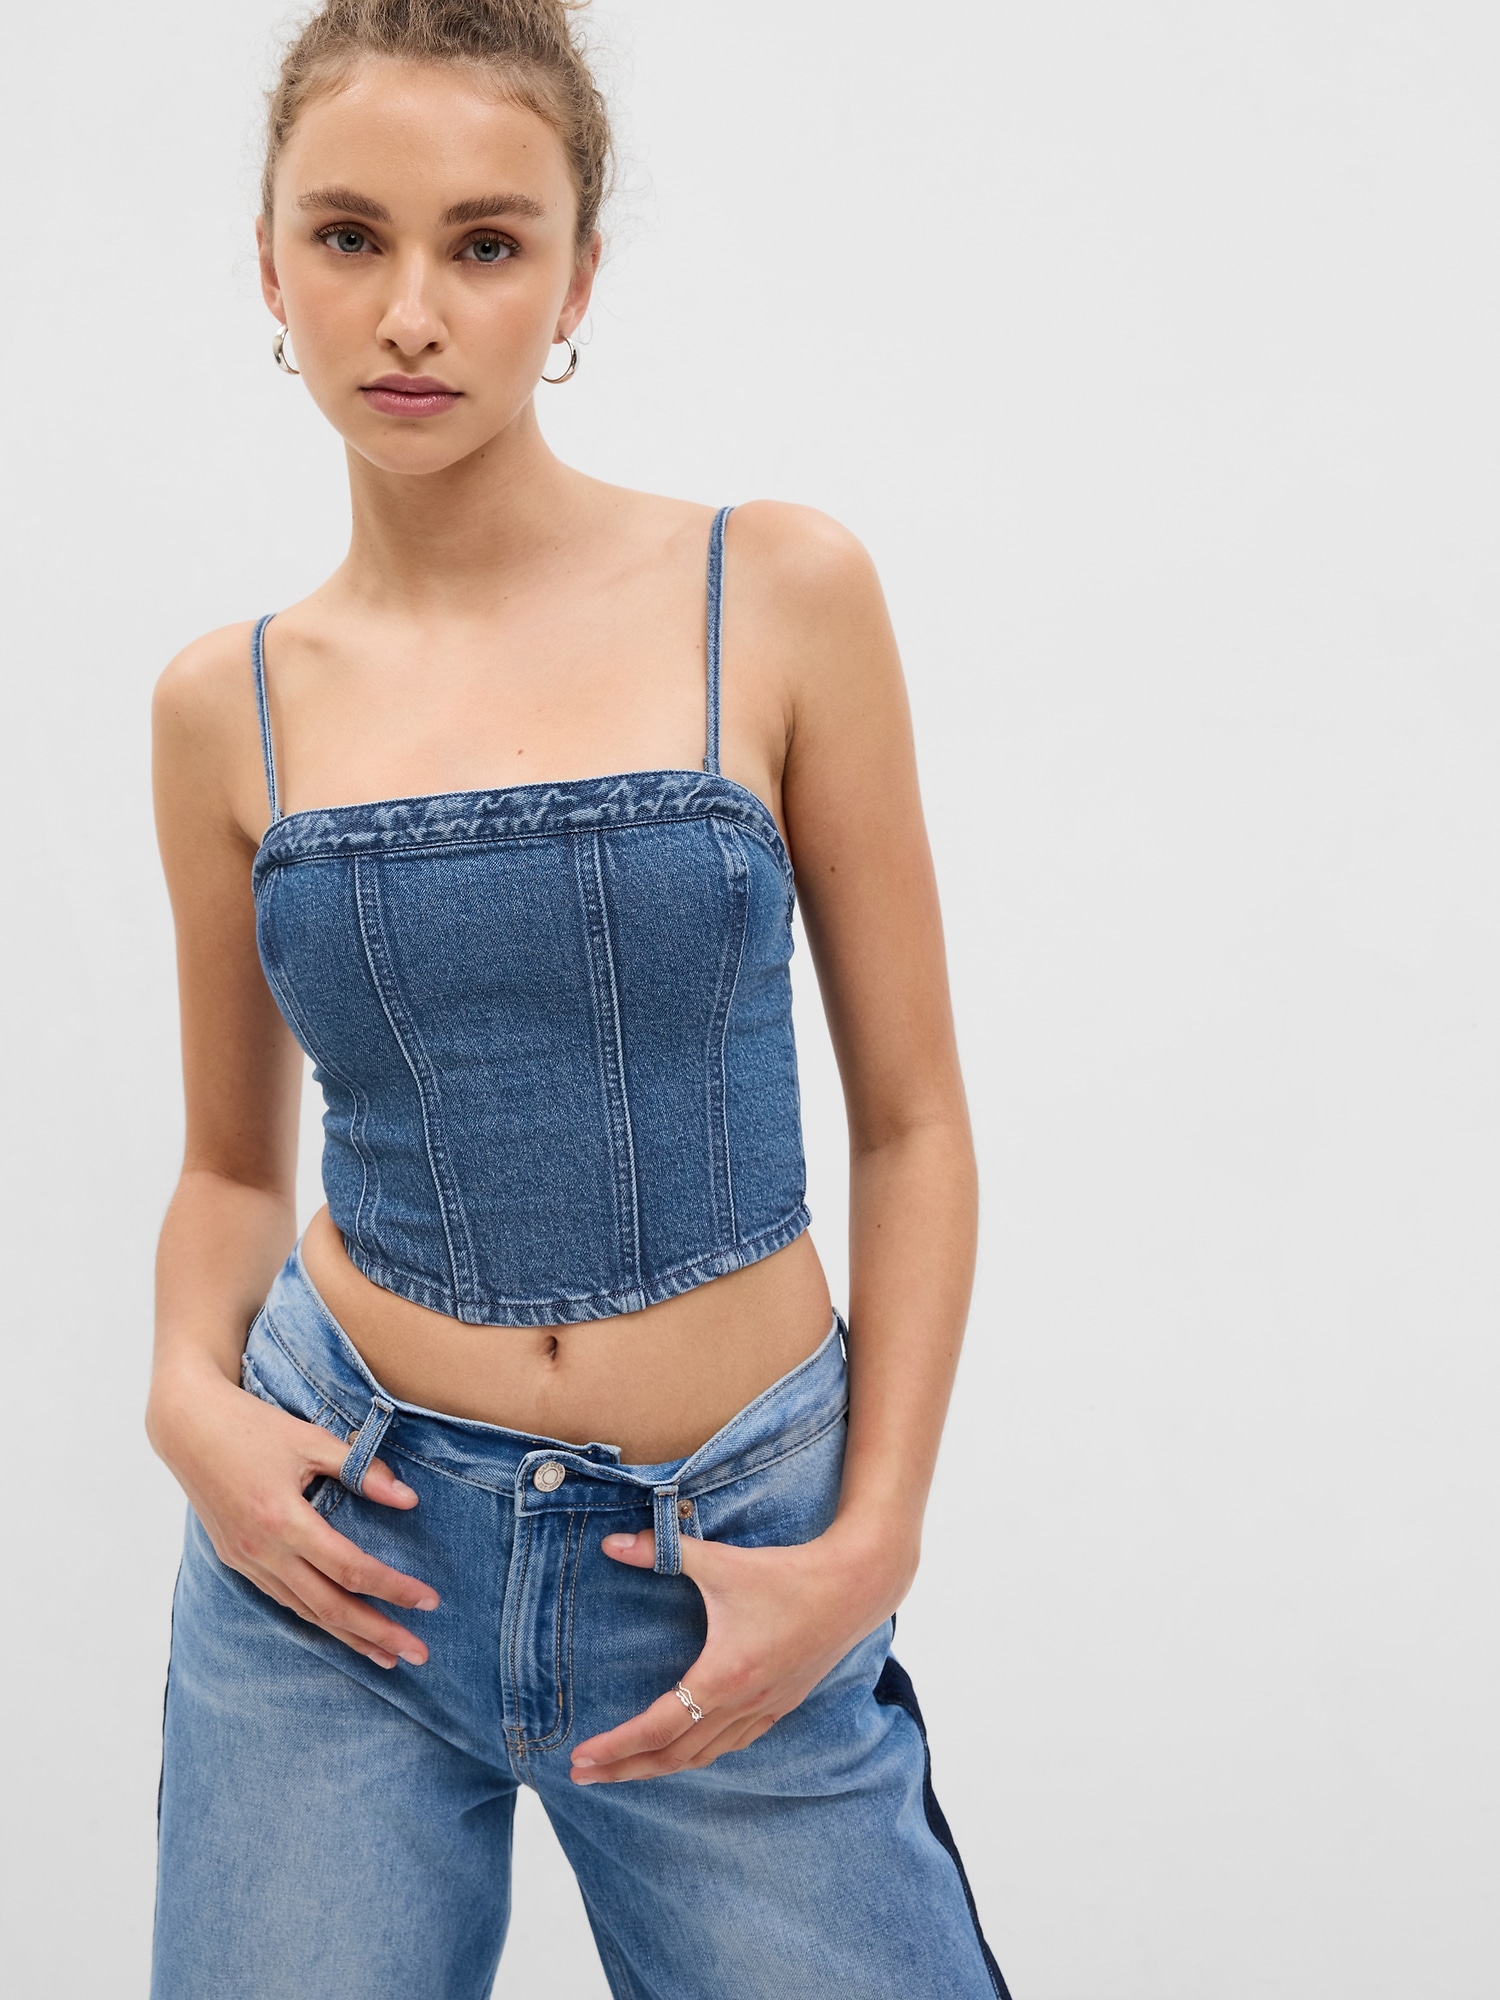 Women's Denim Bustier Crop Top Jeans Push Up Corset Camisole Top with  Adjustable Straps 